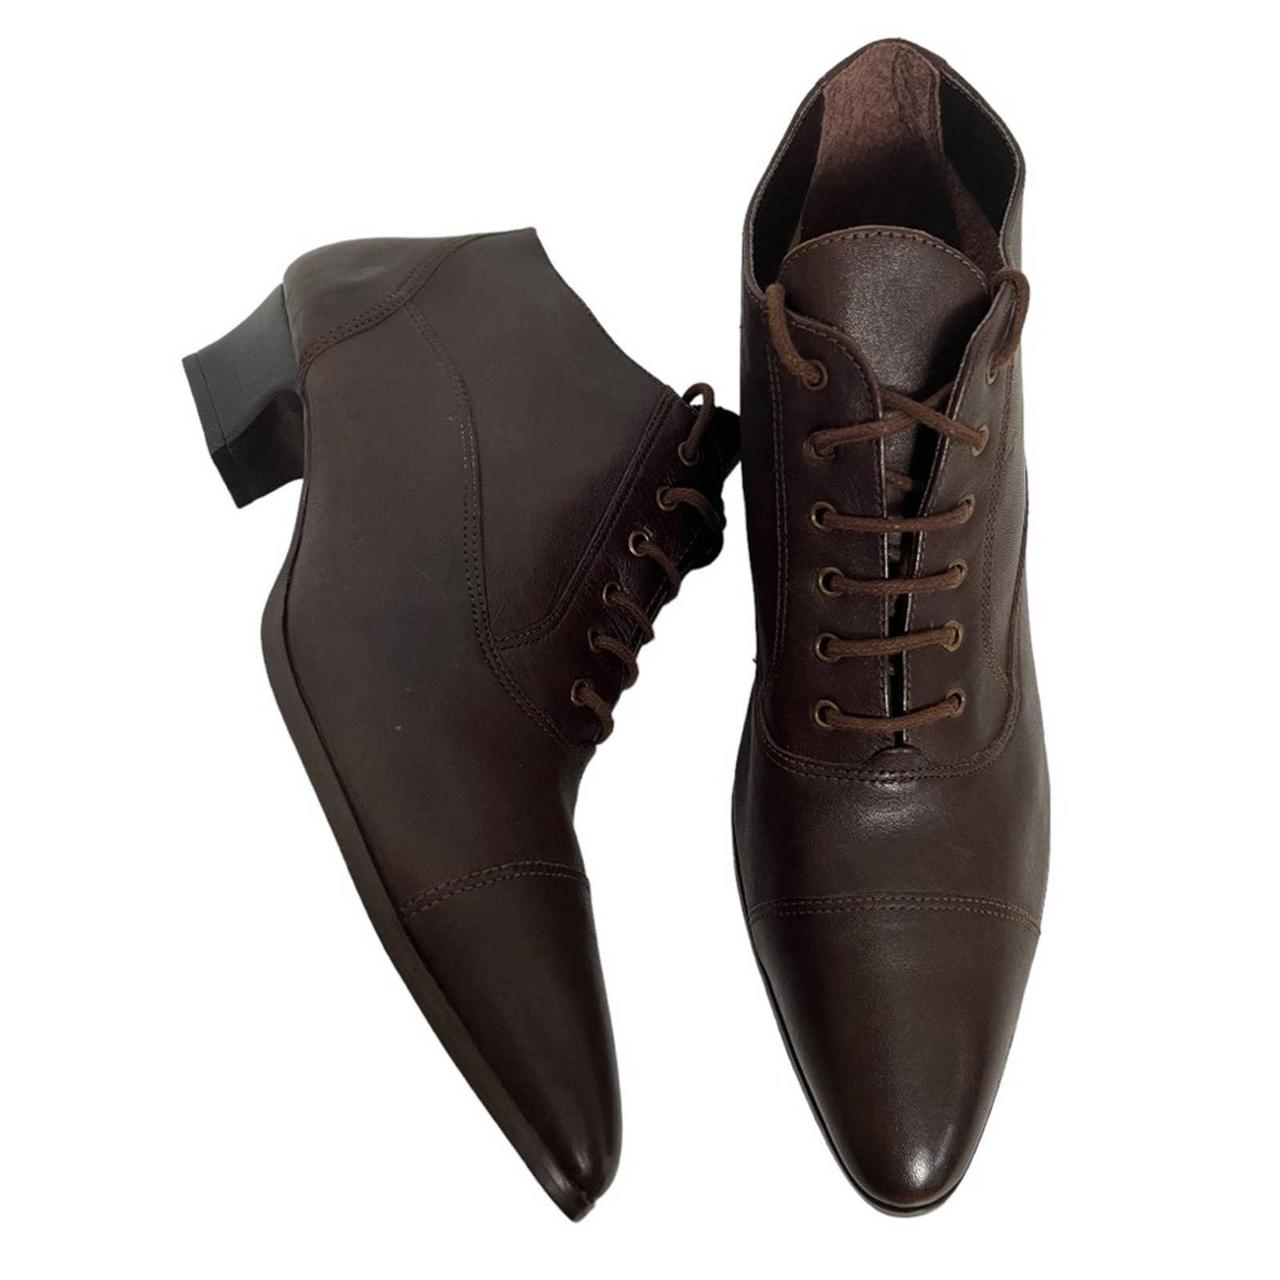 Vintage Women's Boots - Brown - US 11